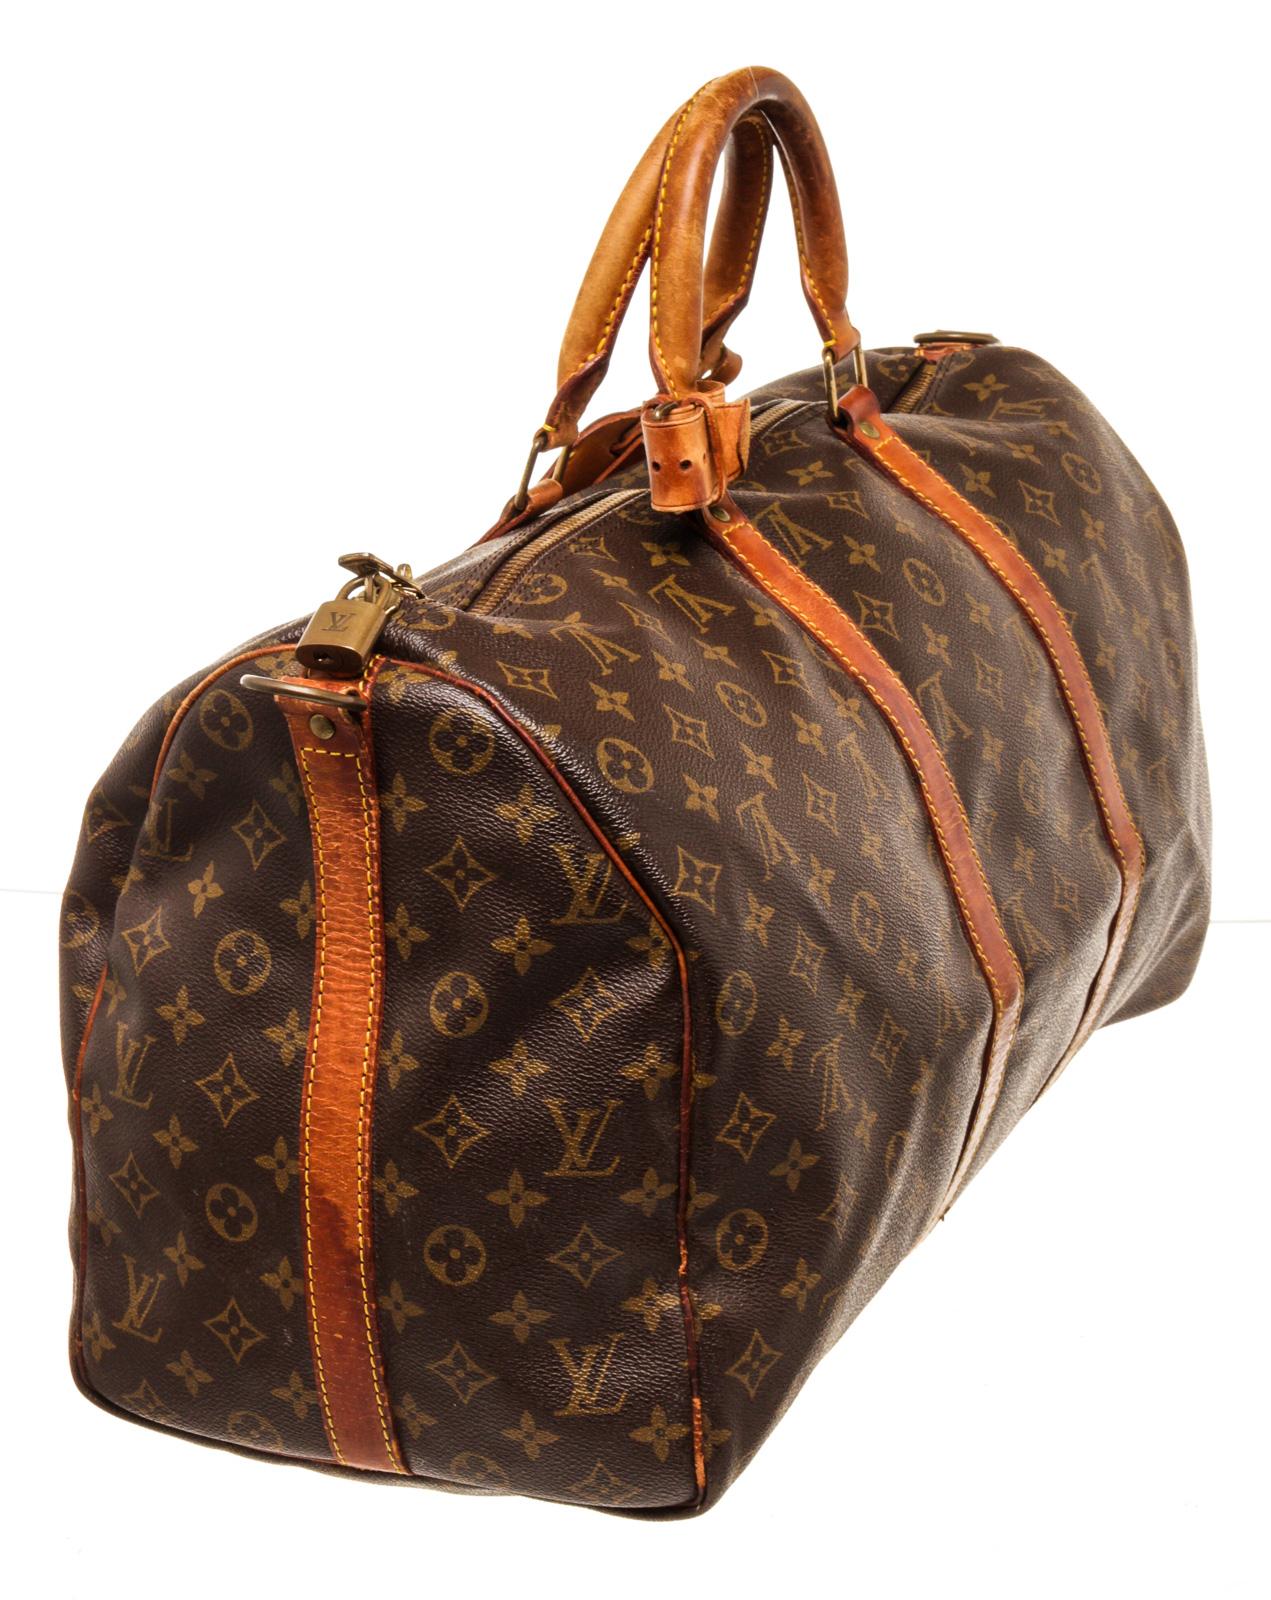 Louis Vuitton Brown Monogram Canvas Keepall 50cm Travel/Weekend Bag with monogram canvas, gold-tone hardware, trim tan vachetta leather, dual top handle, adjustable shoulder strap, and zipper closure.

440066MSC